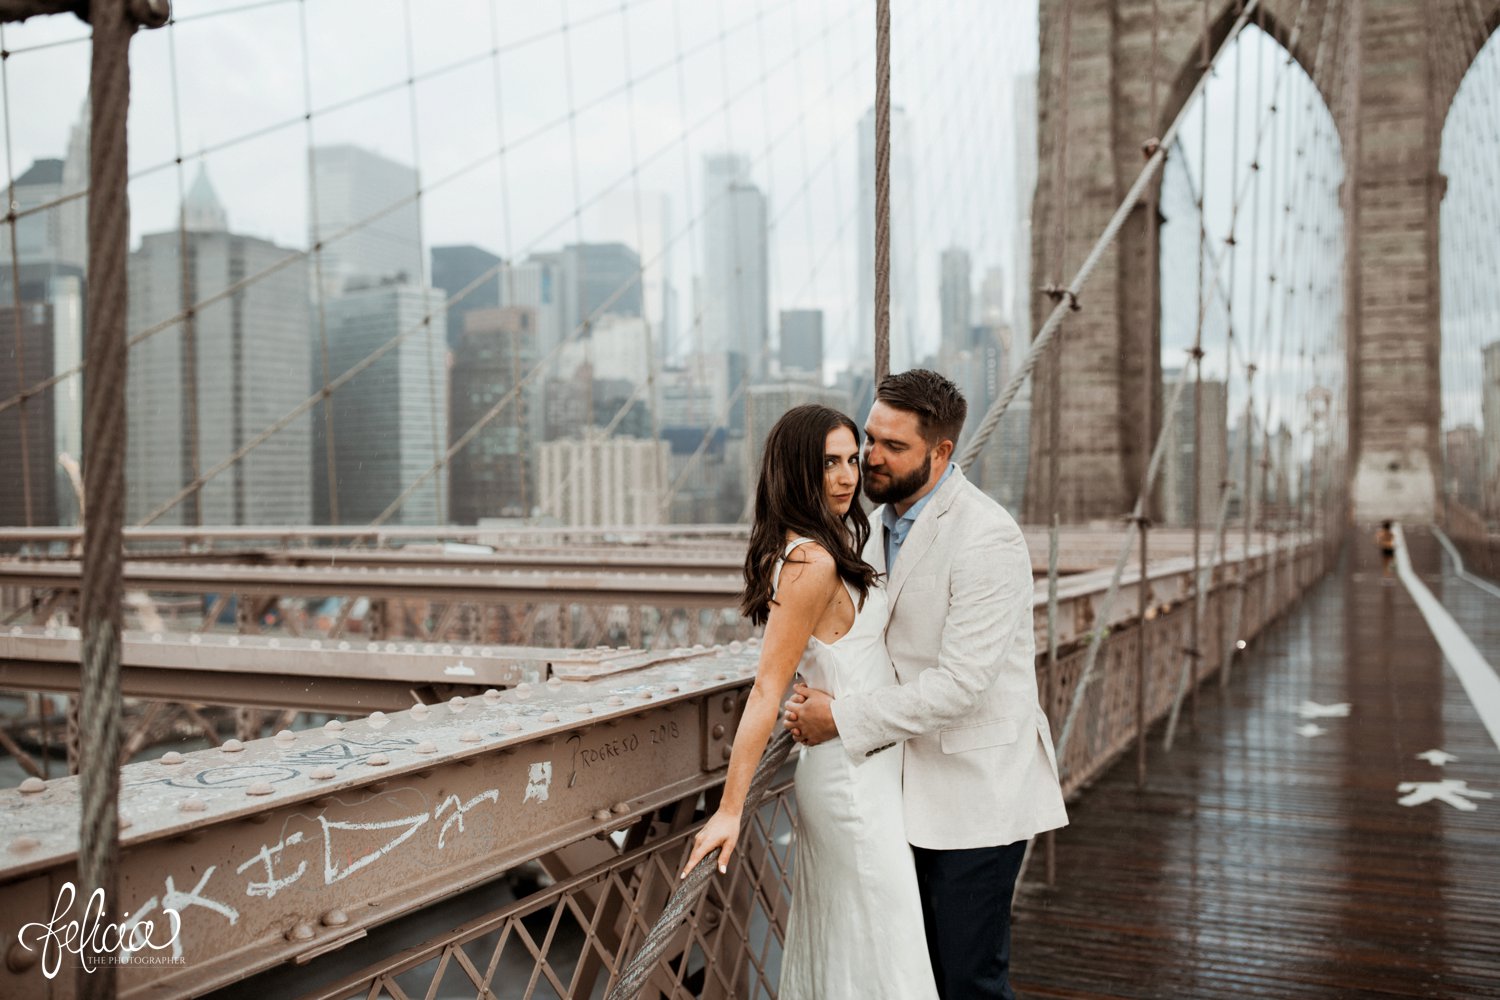 images by feliciathephotographer.com | destination wedding photographer | elopement | new york city | second look | brooklyn bridge | hand in hand | cowl neck dress | contrast | skyline | 